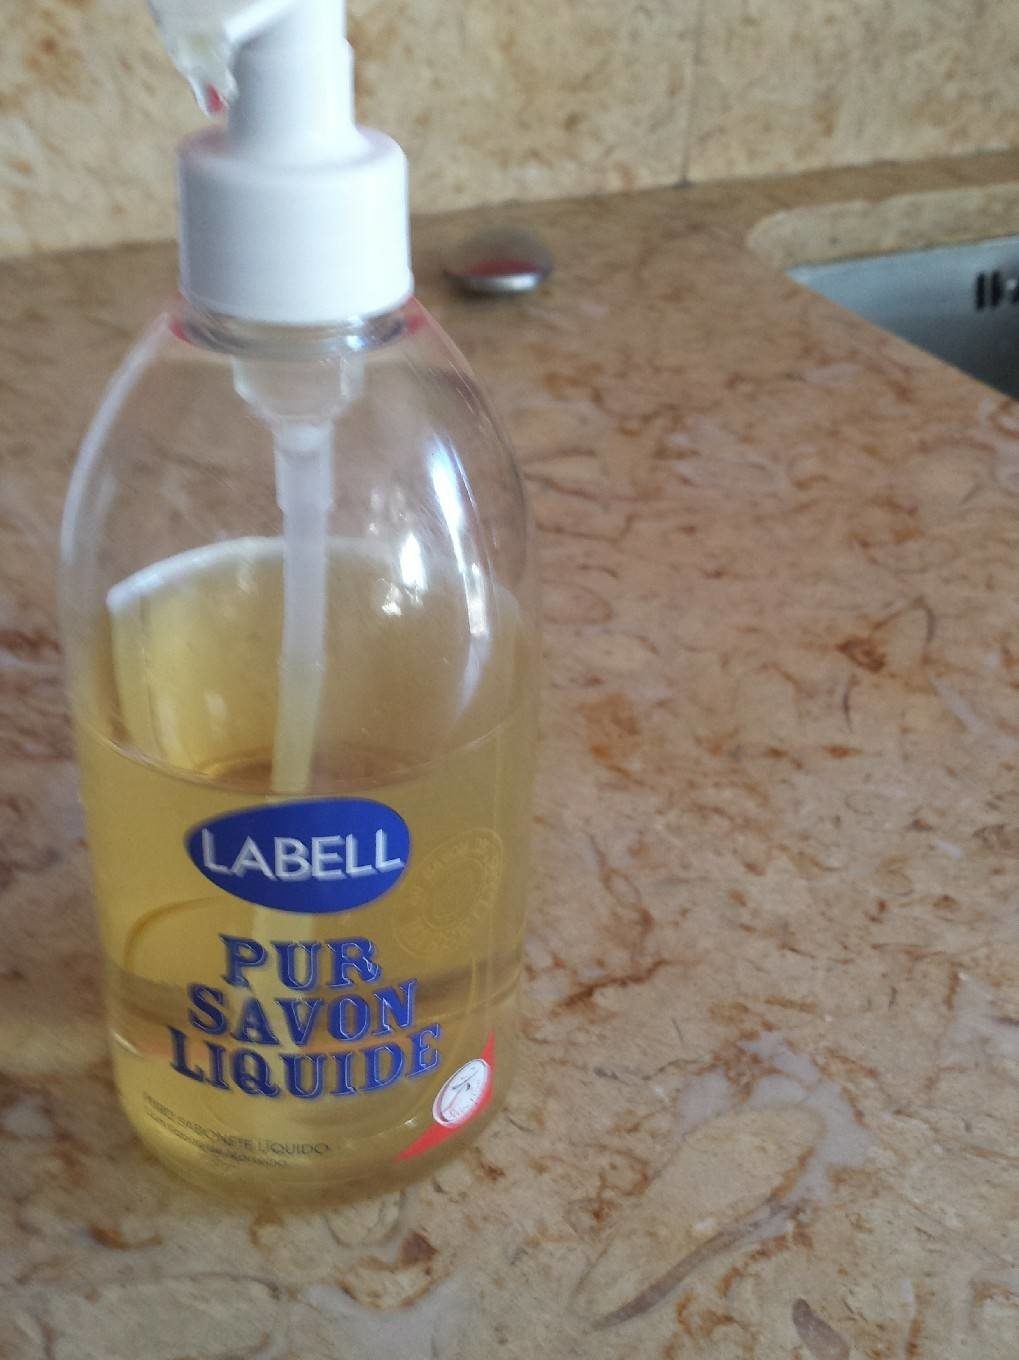 Pur savon liquide - 製品 - fr